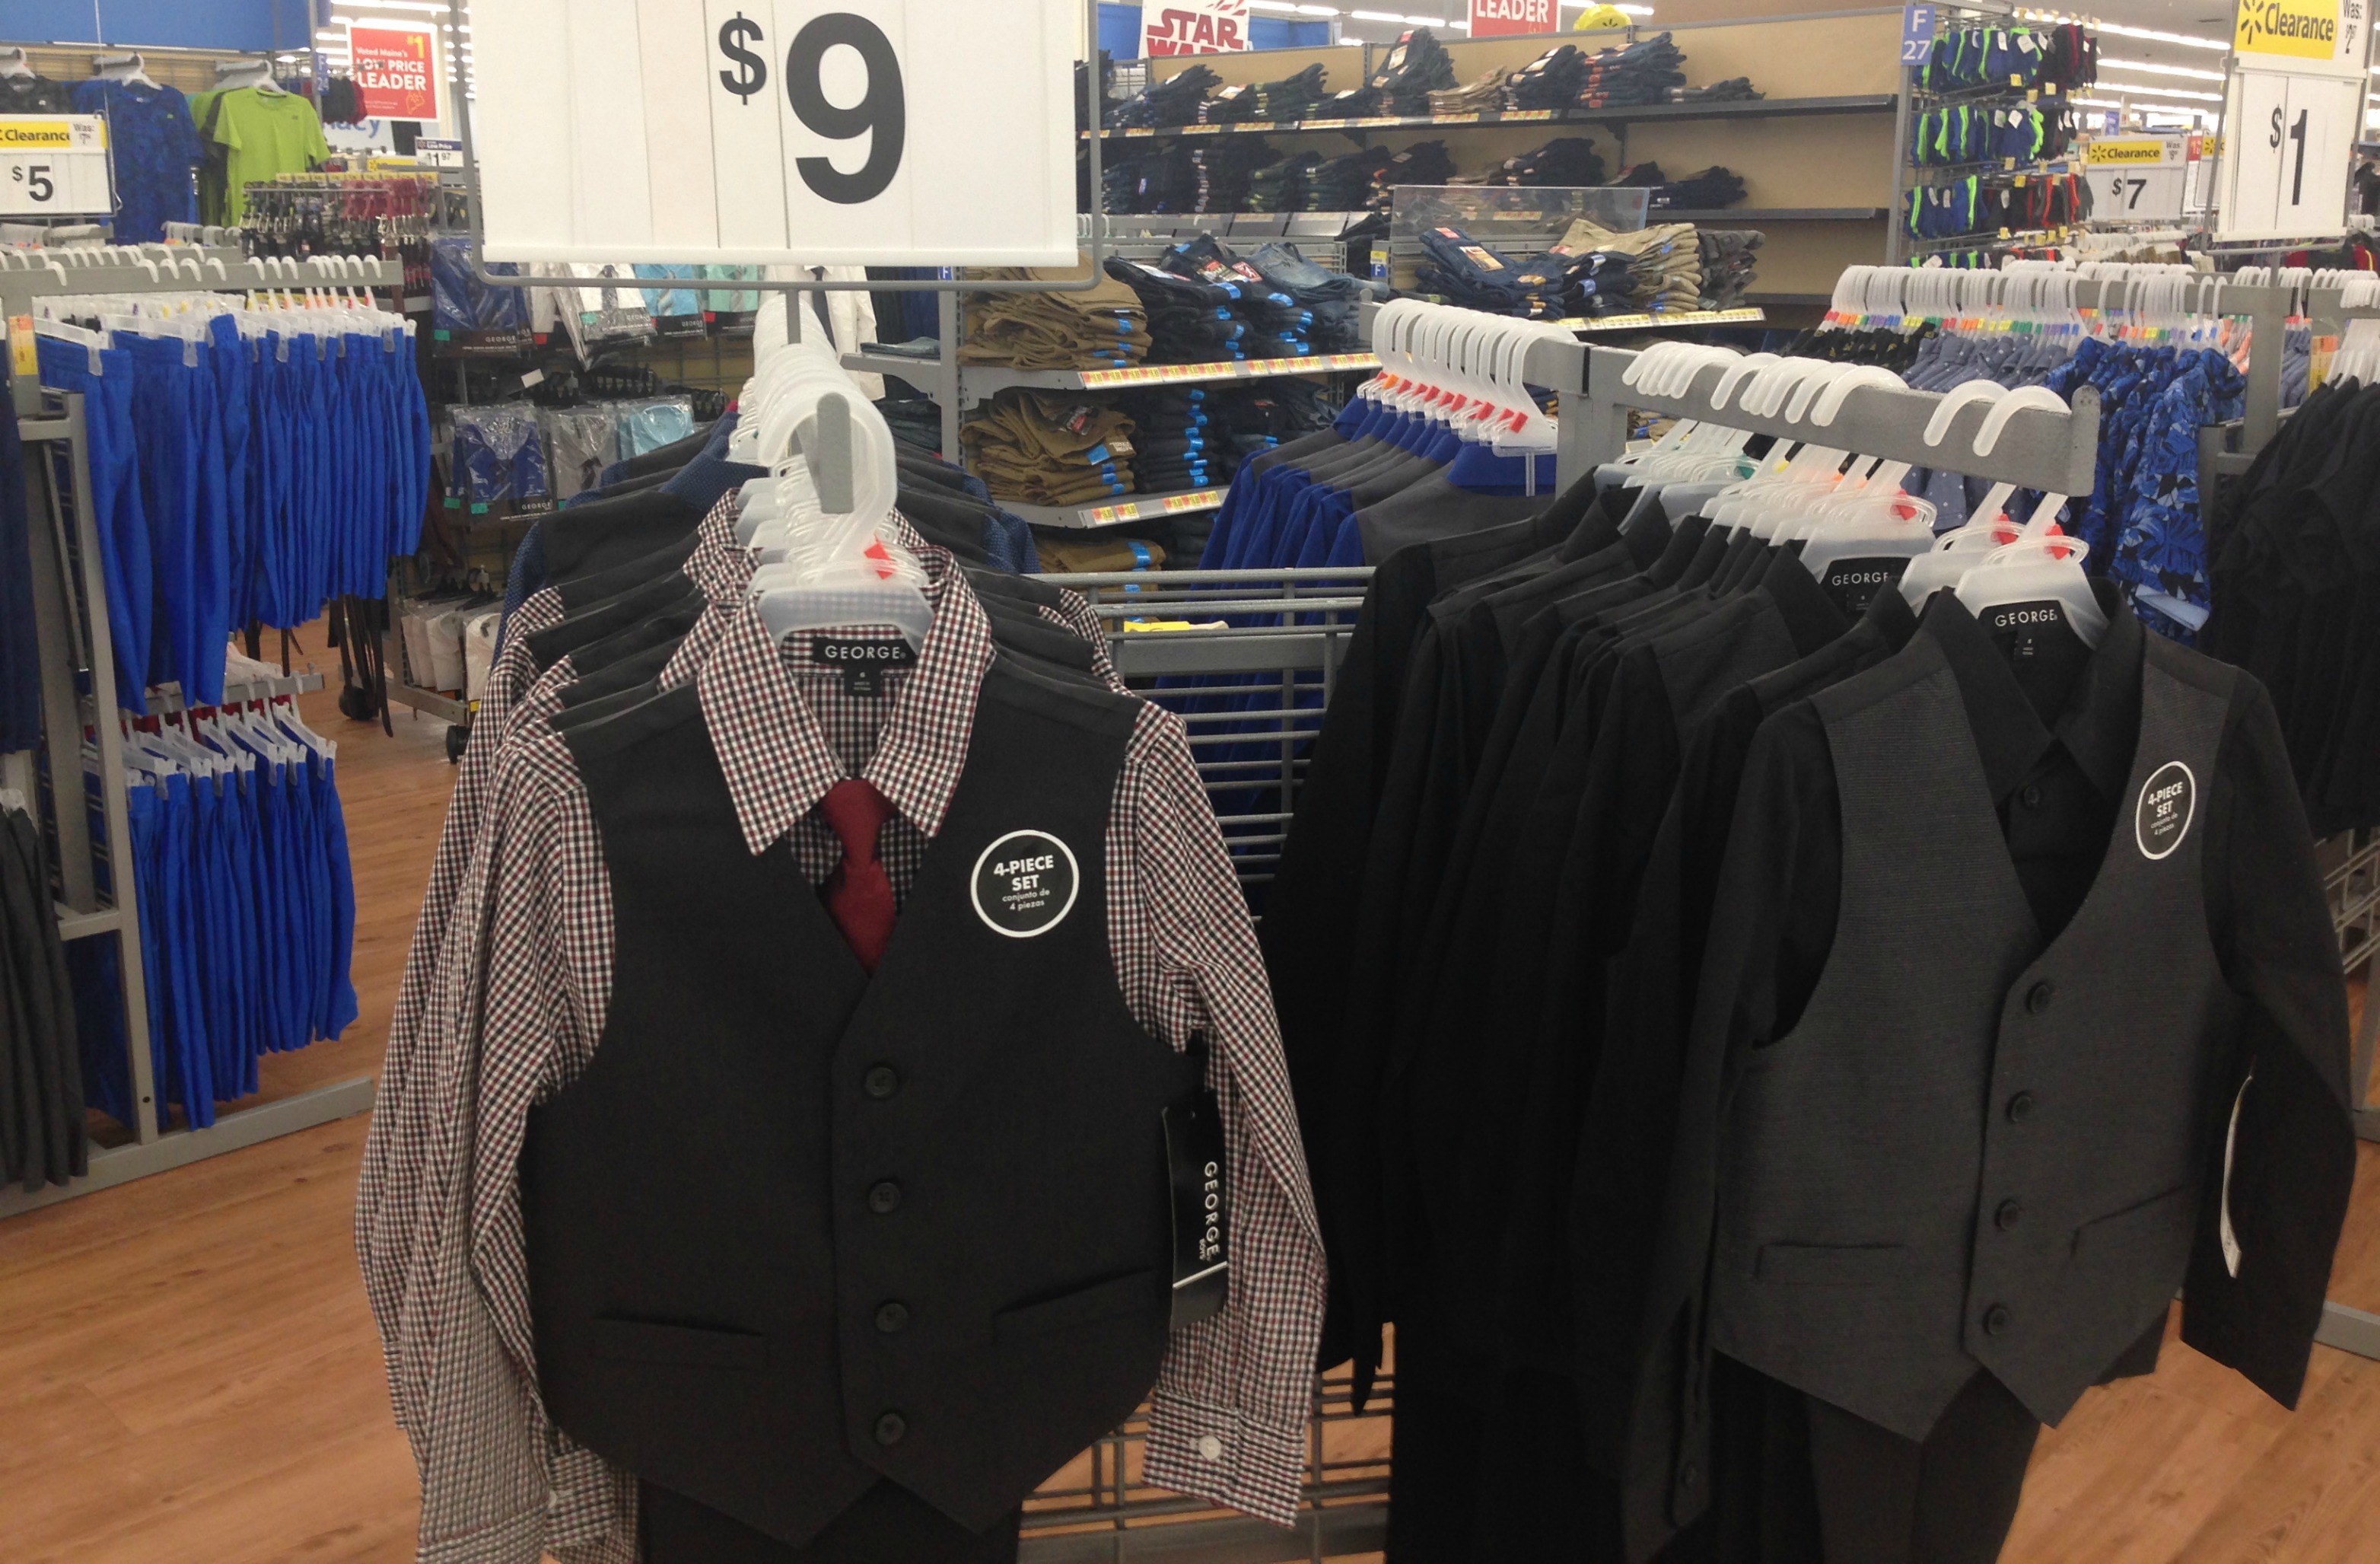 Walmart Clothing Clearance: Infant Fleece Jackets, Boys Long Sleeve Tees Only $1 Each & More ...